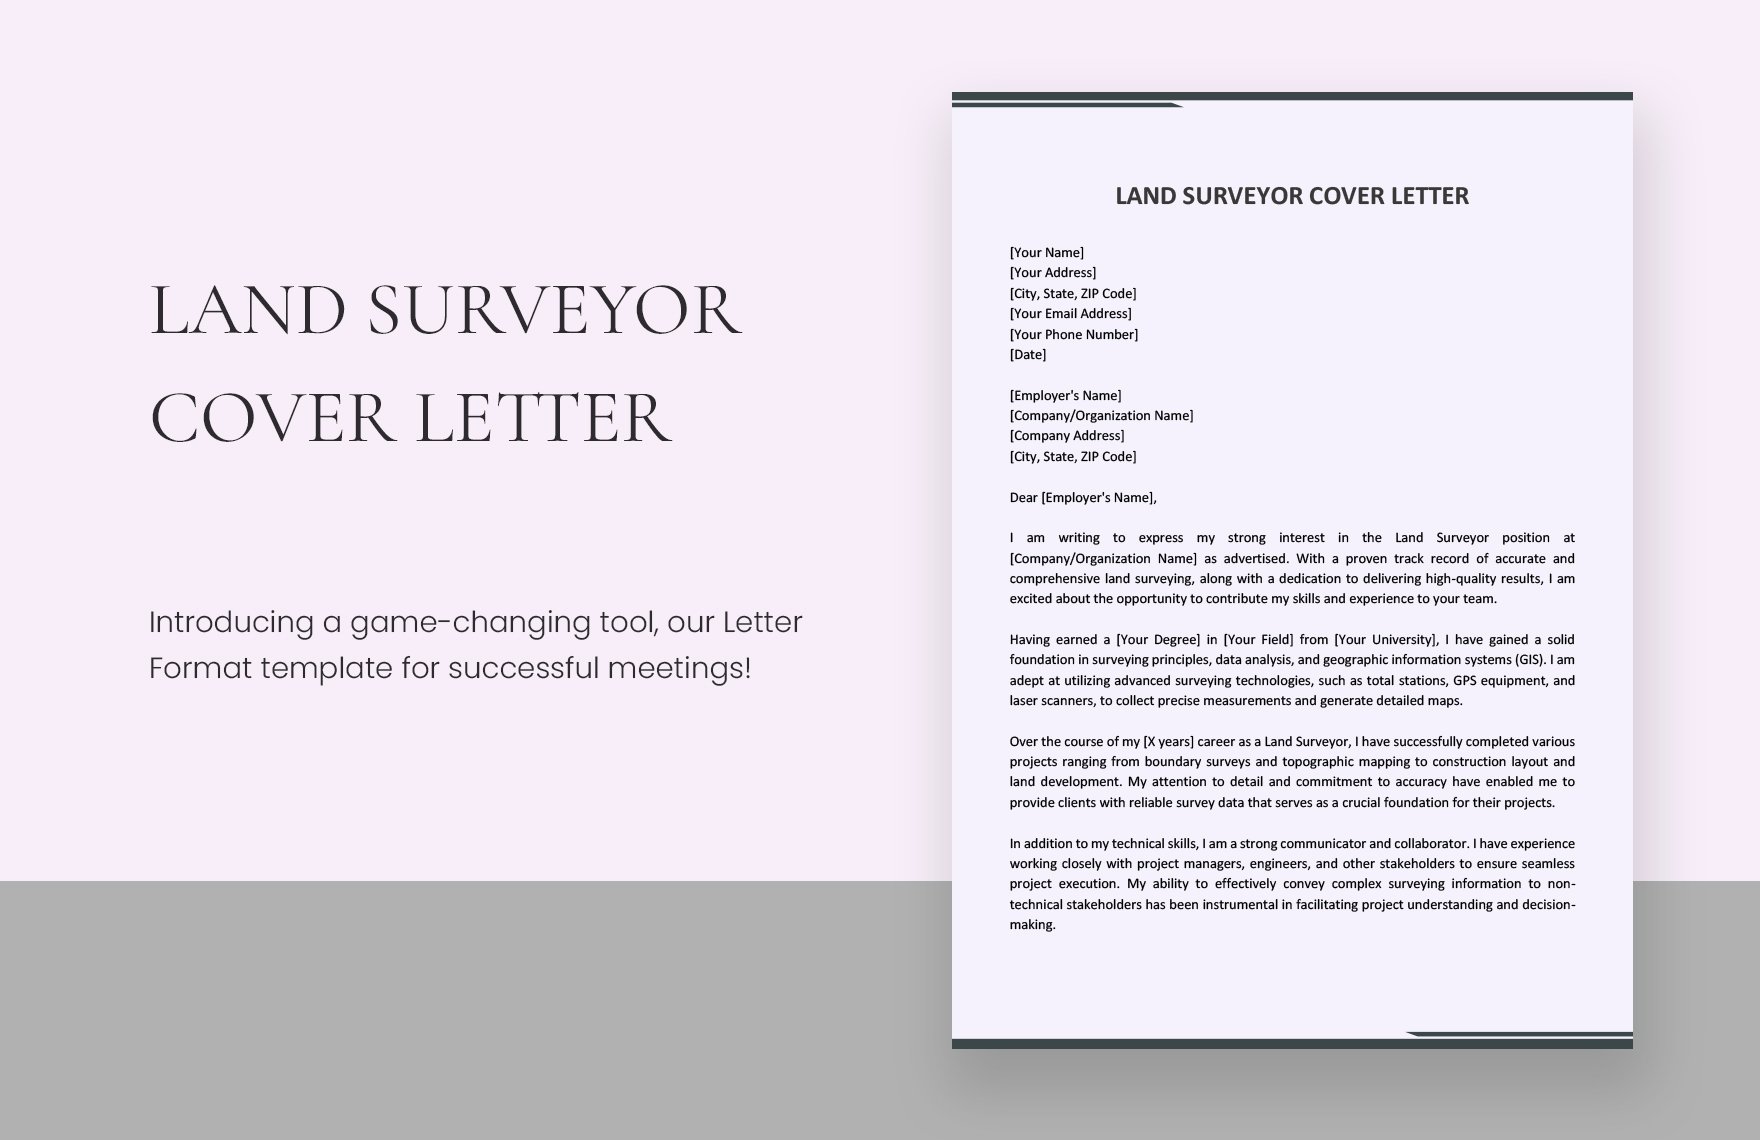 Land Surveyor Cover Letter in Word, Google Docs, PDF